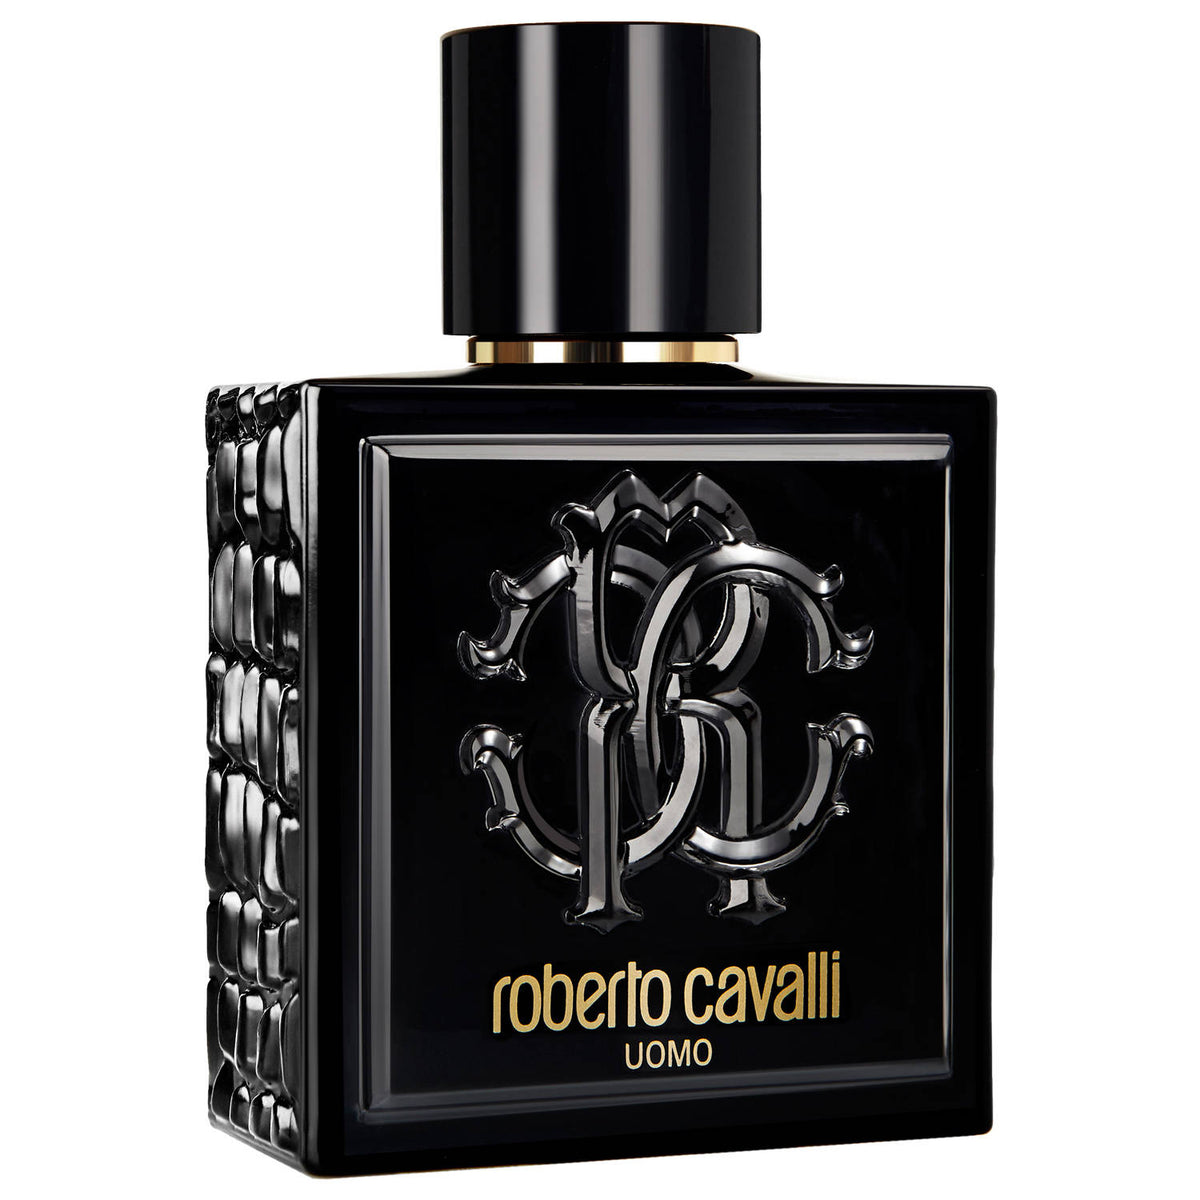 ROBERTO CAVALLI UOMO Fragrance EDT 100ML - Niche Gallery